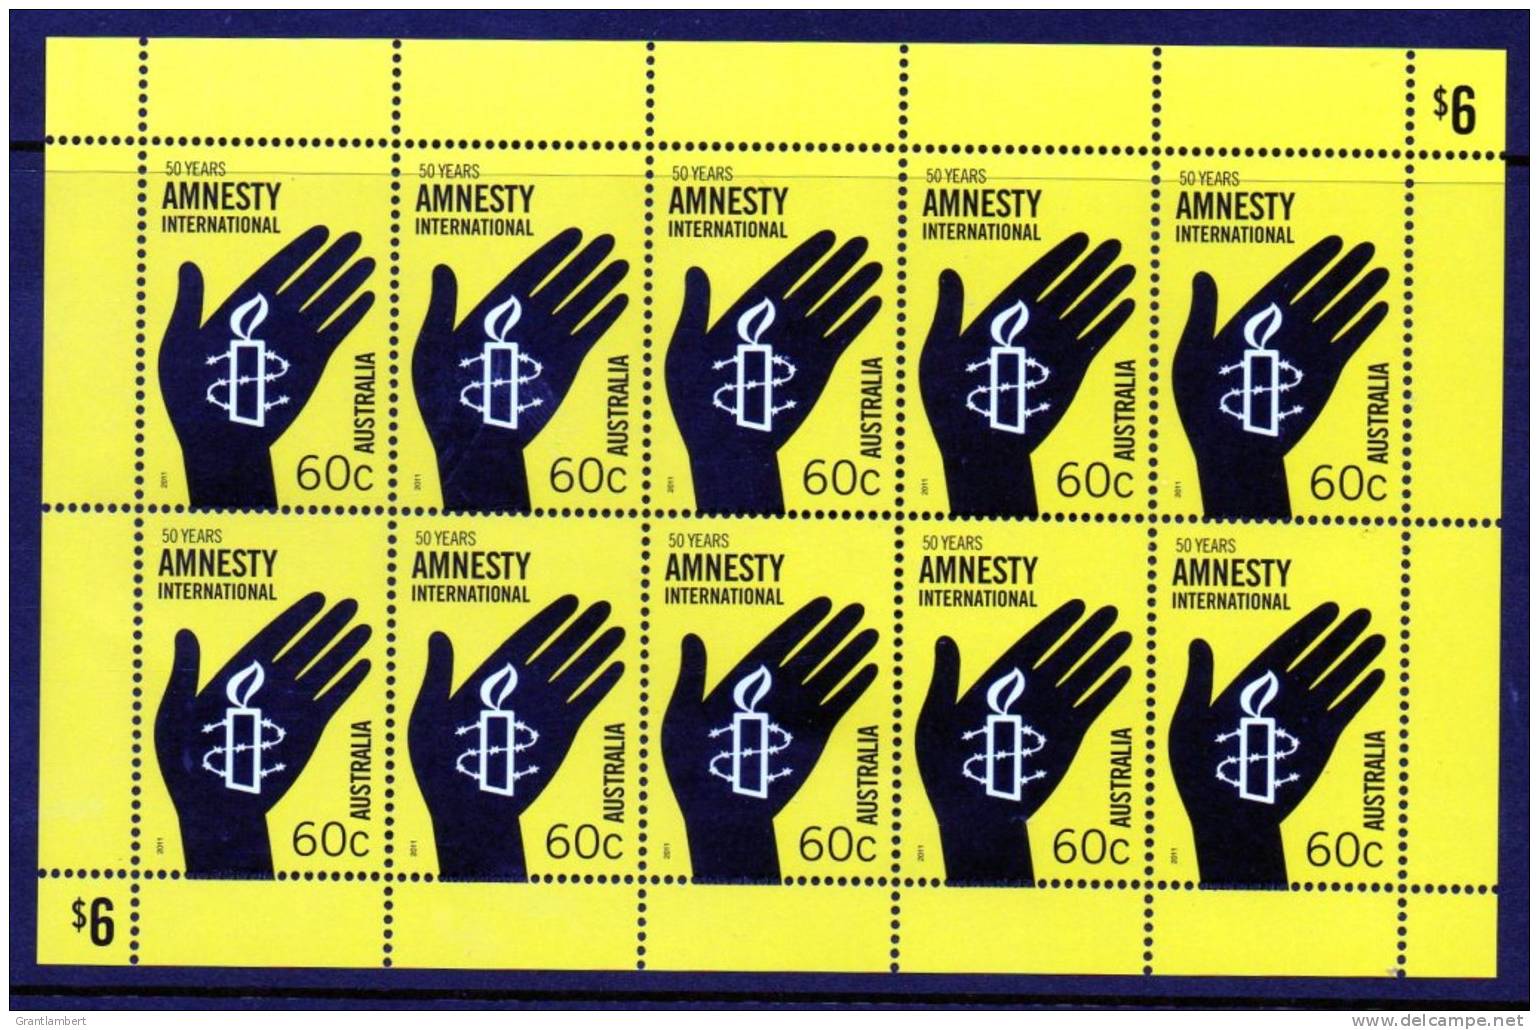 Australia 2011 60c Amnesty International 50 Years Sheetlet Of 10 MNH - Mint Stamps